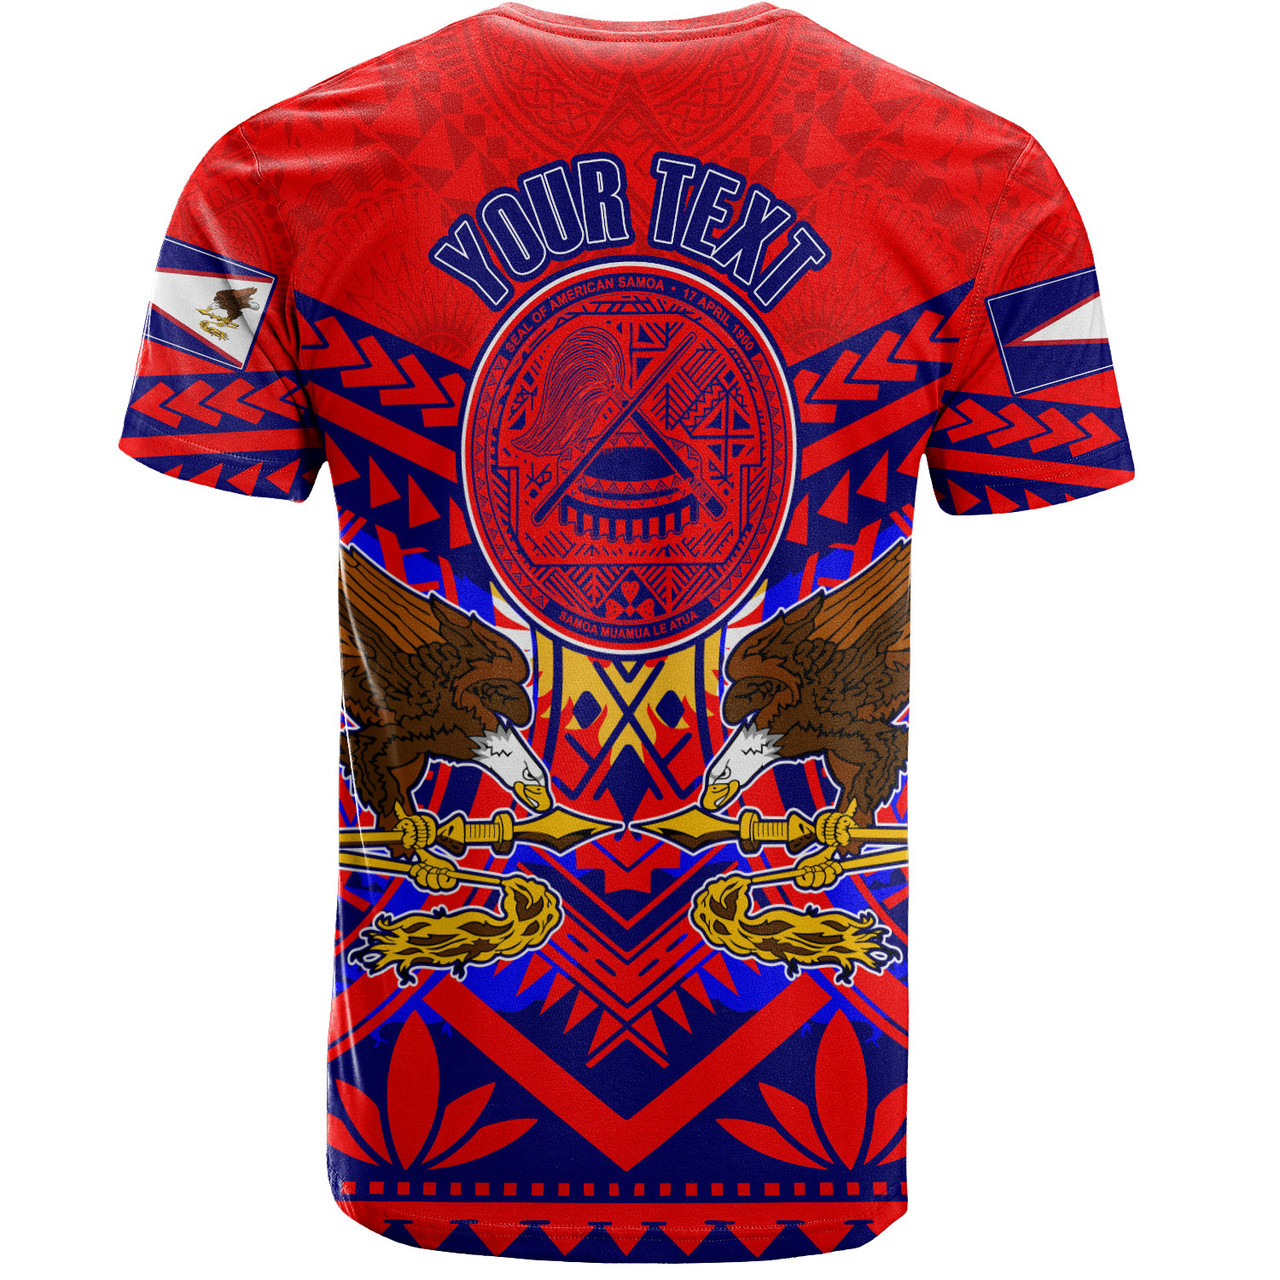 American Samoa T-Shirt Custom American Samoa Seal And Eagle Polynesian Tattoo Red